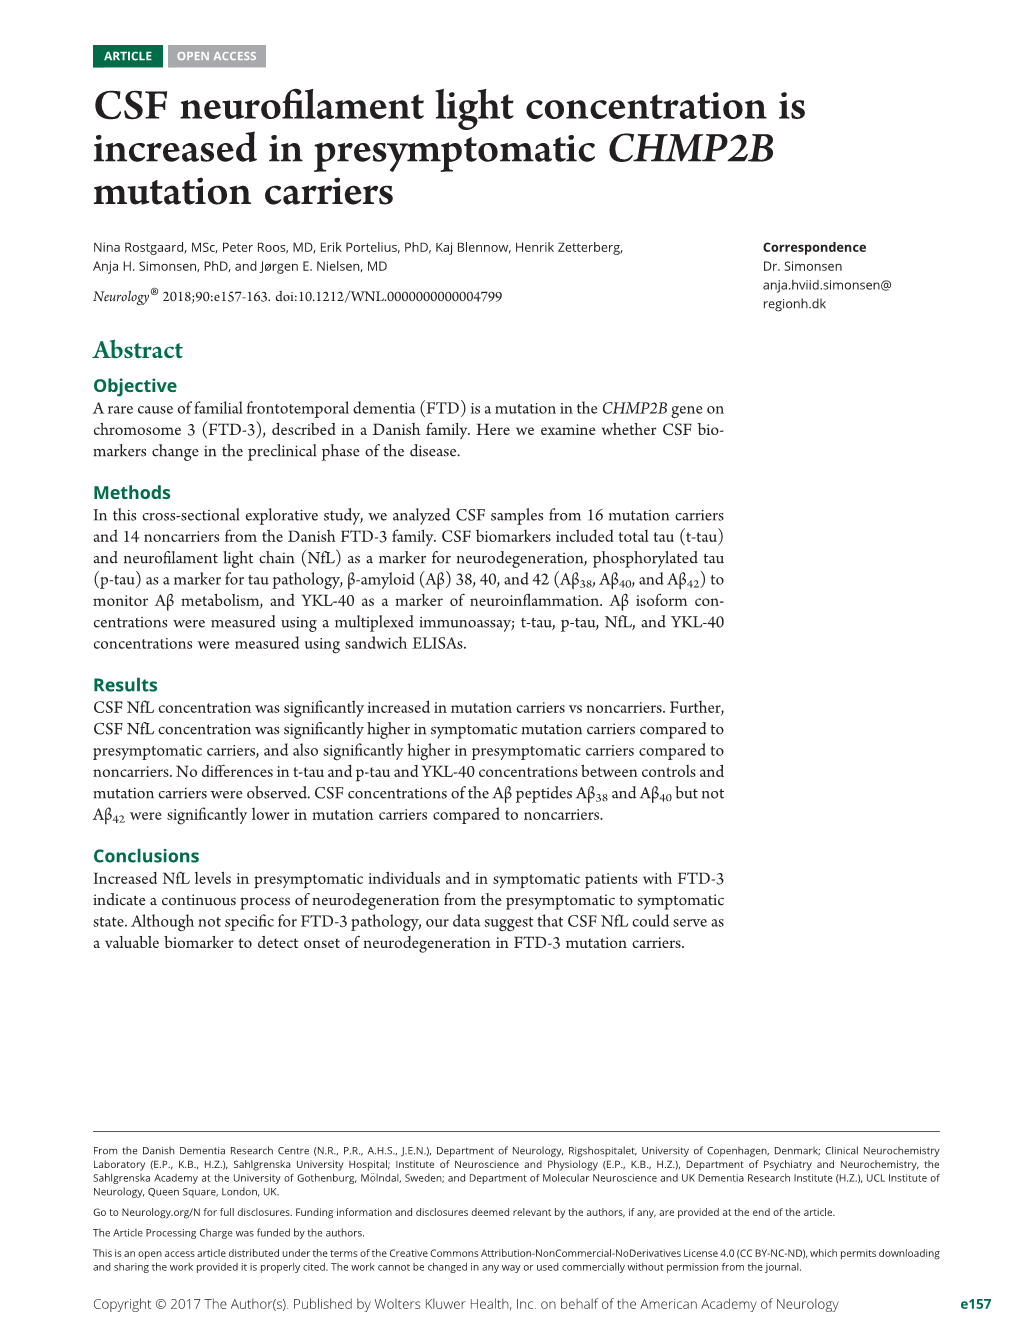 CSF Neurofilament Light Concentration Is Increased in Presymptomatic CHMP2B Mutation Carriers Nina Rostgaard, Peter Roos, Erik Portelius, Et Al